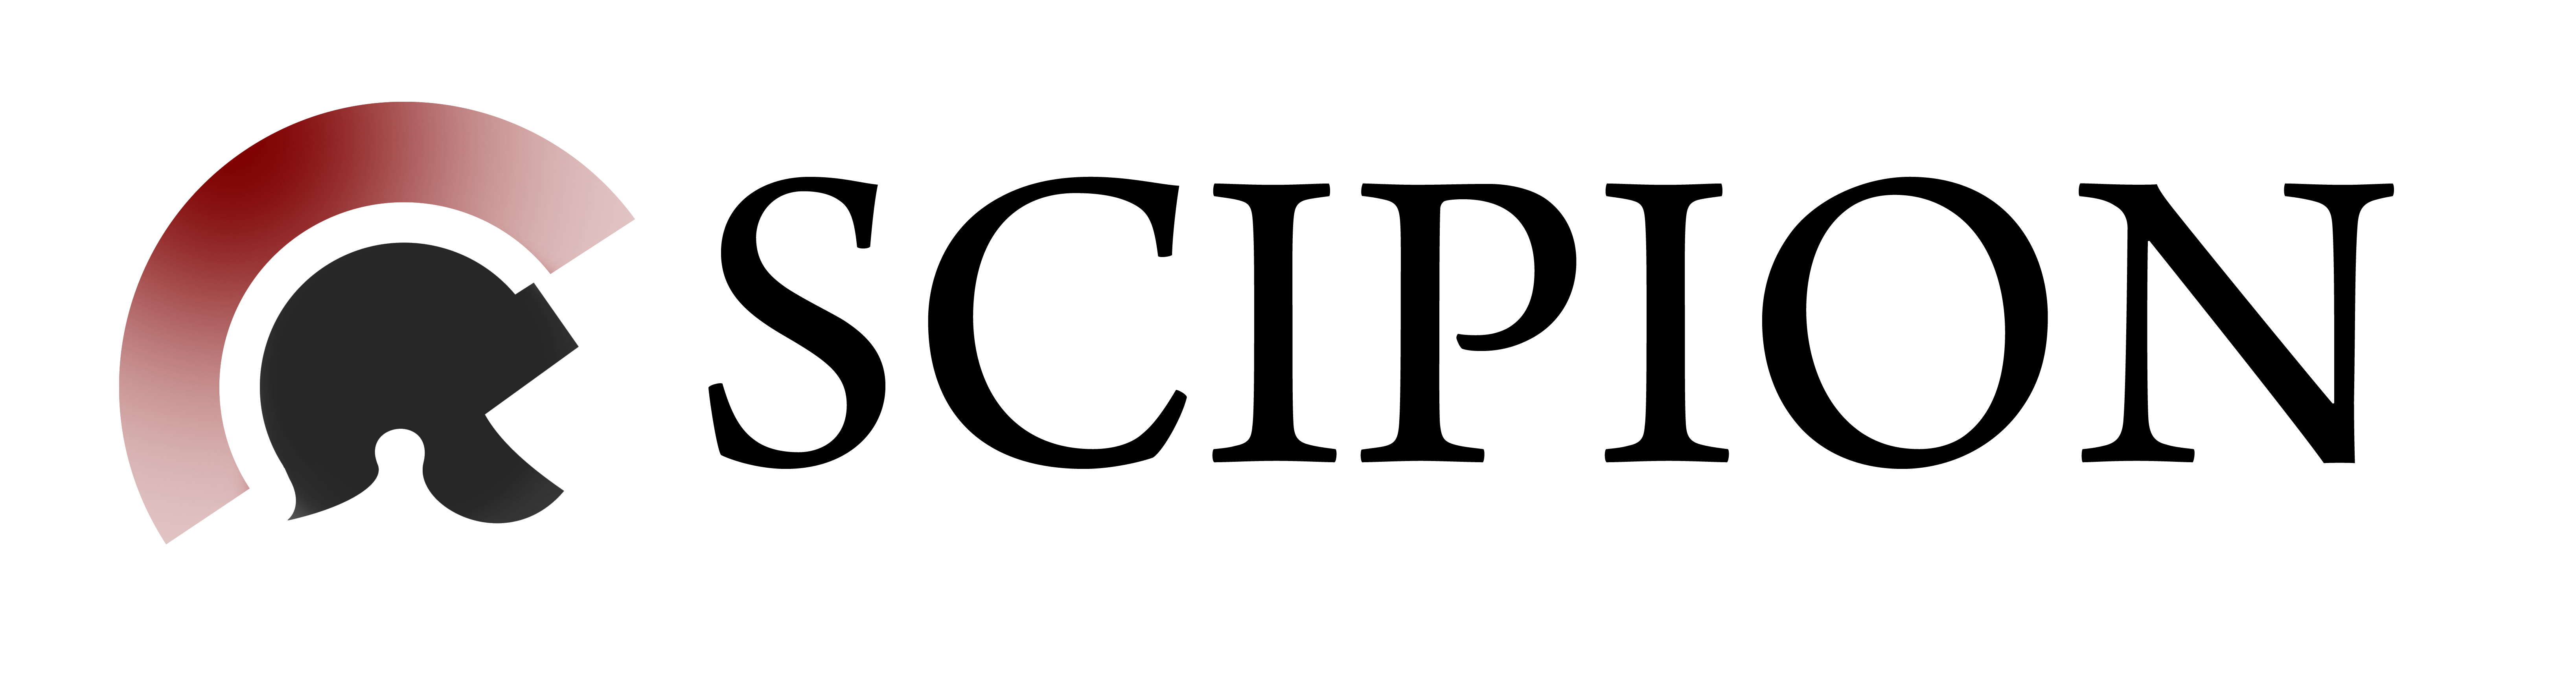 scipion_logo